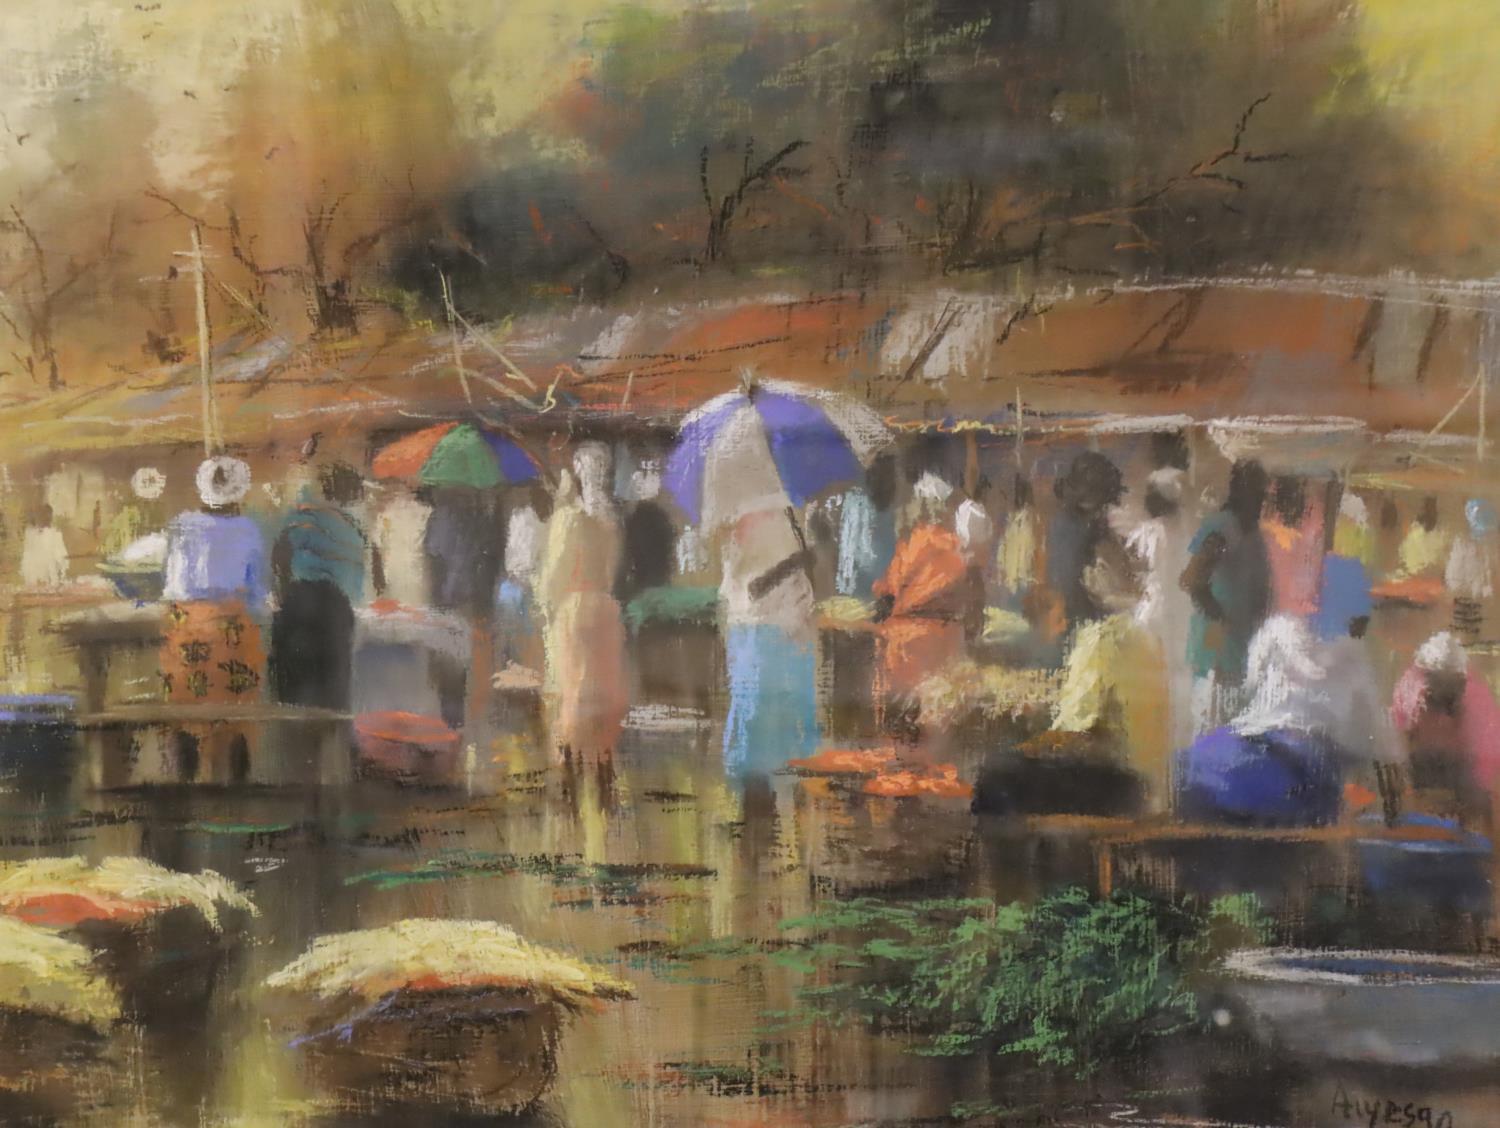 Segun Aiyesan (Nigerian b. 1971); African fruit market scene in pastel, framed and glazed. 92 x 71